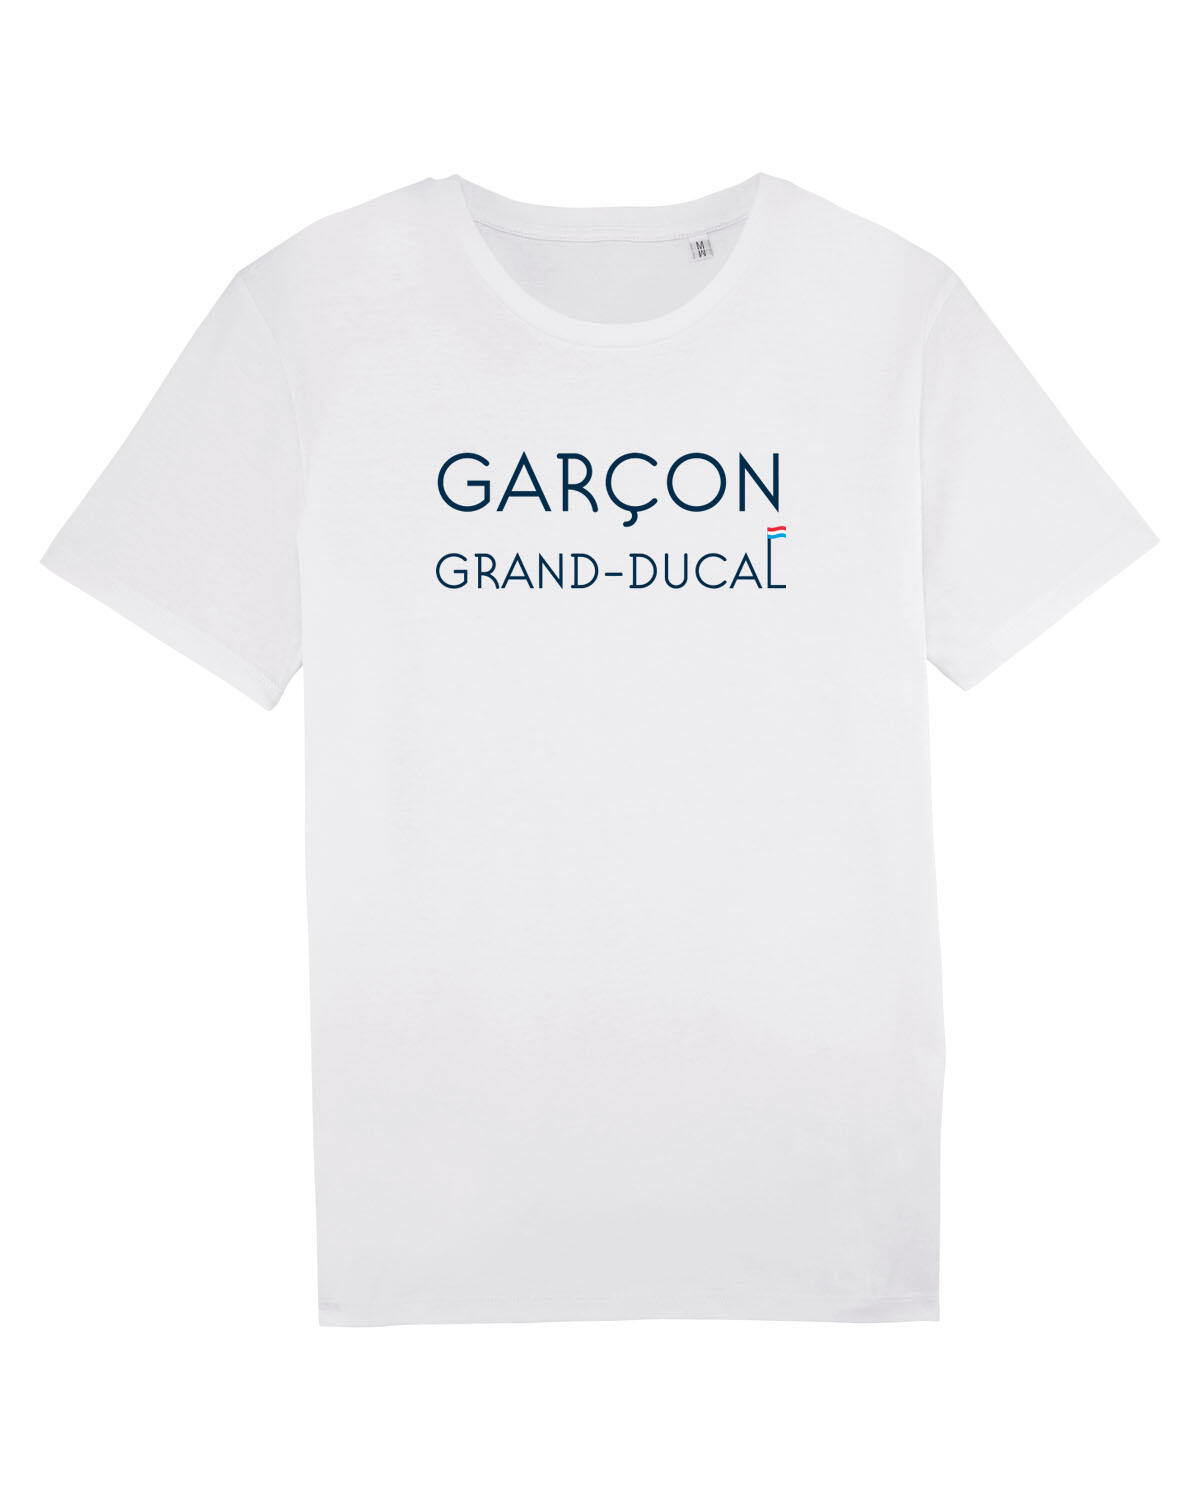 Tee shirt "boy grand-ducal" white 